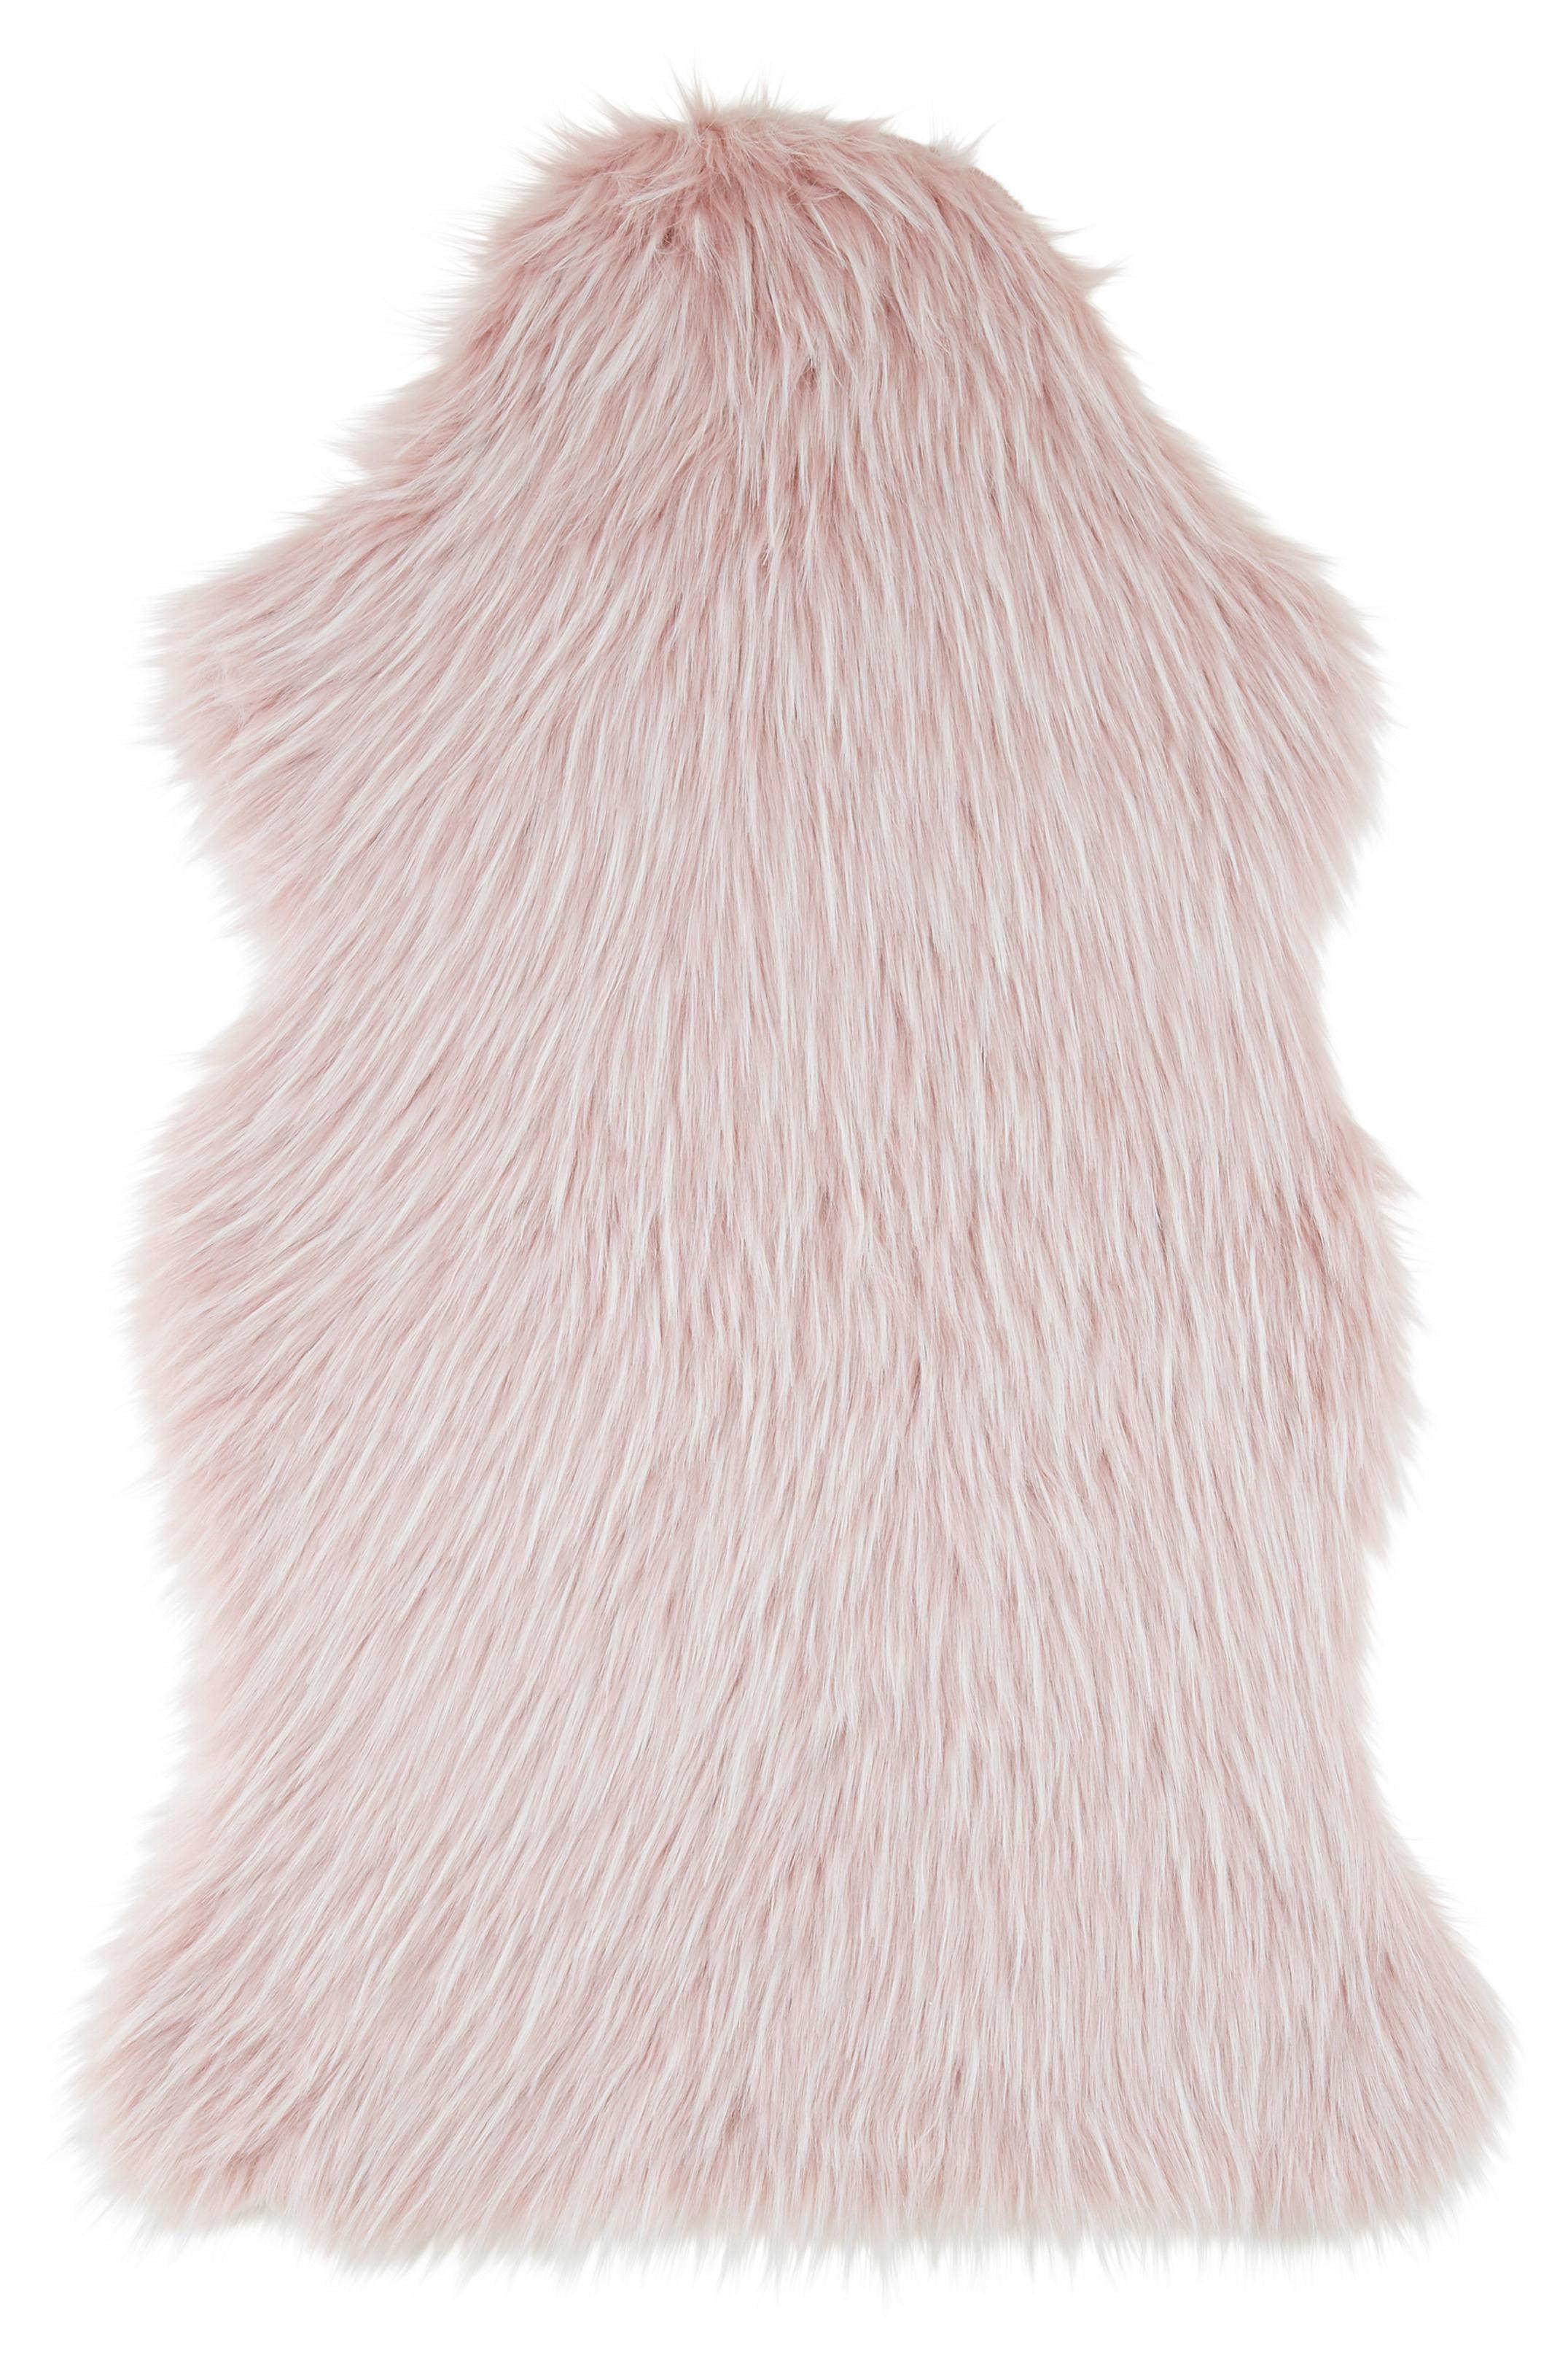 Umělá Kožešina Marina, 90/60cm, Růžová - bílá/růžová, kožešina/textil (60/90cm) - Modern Living